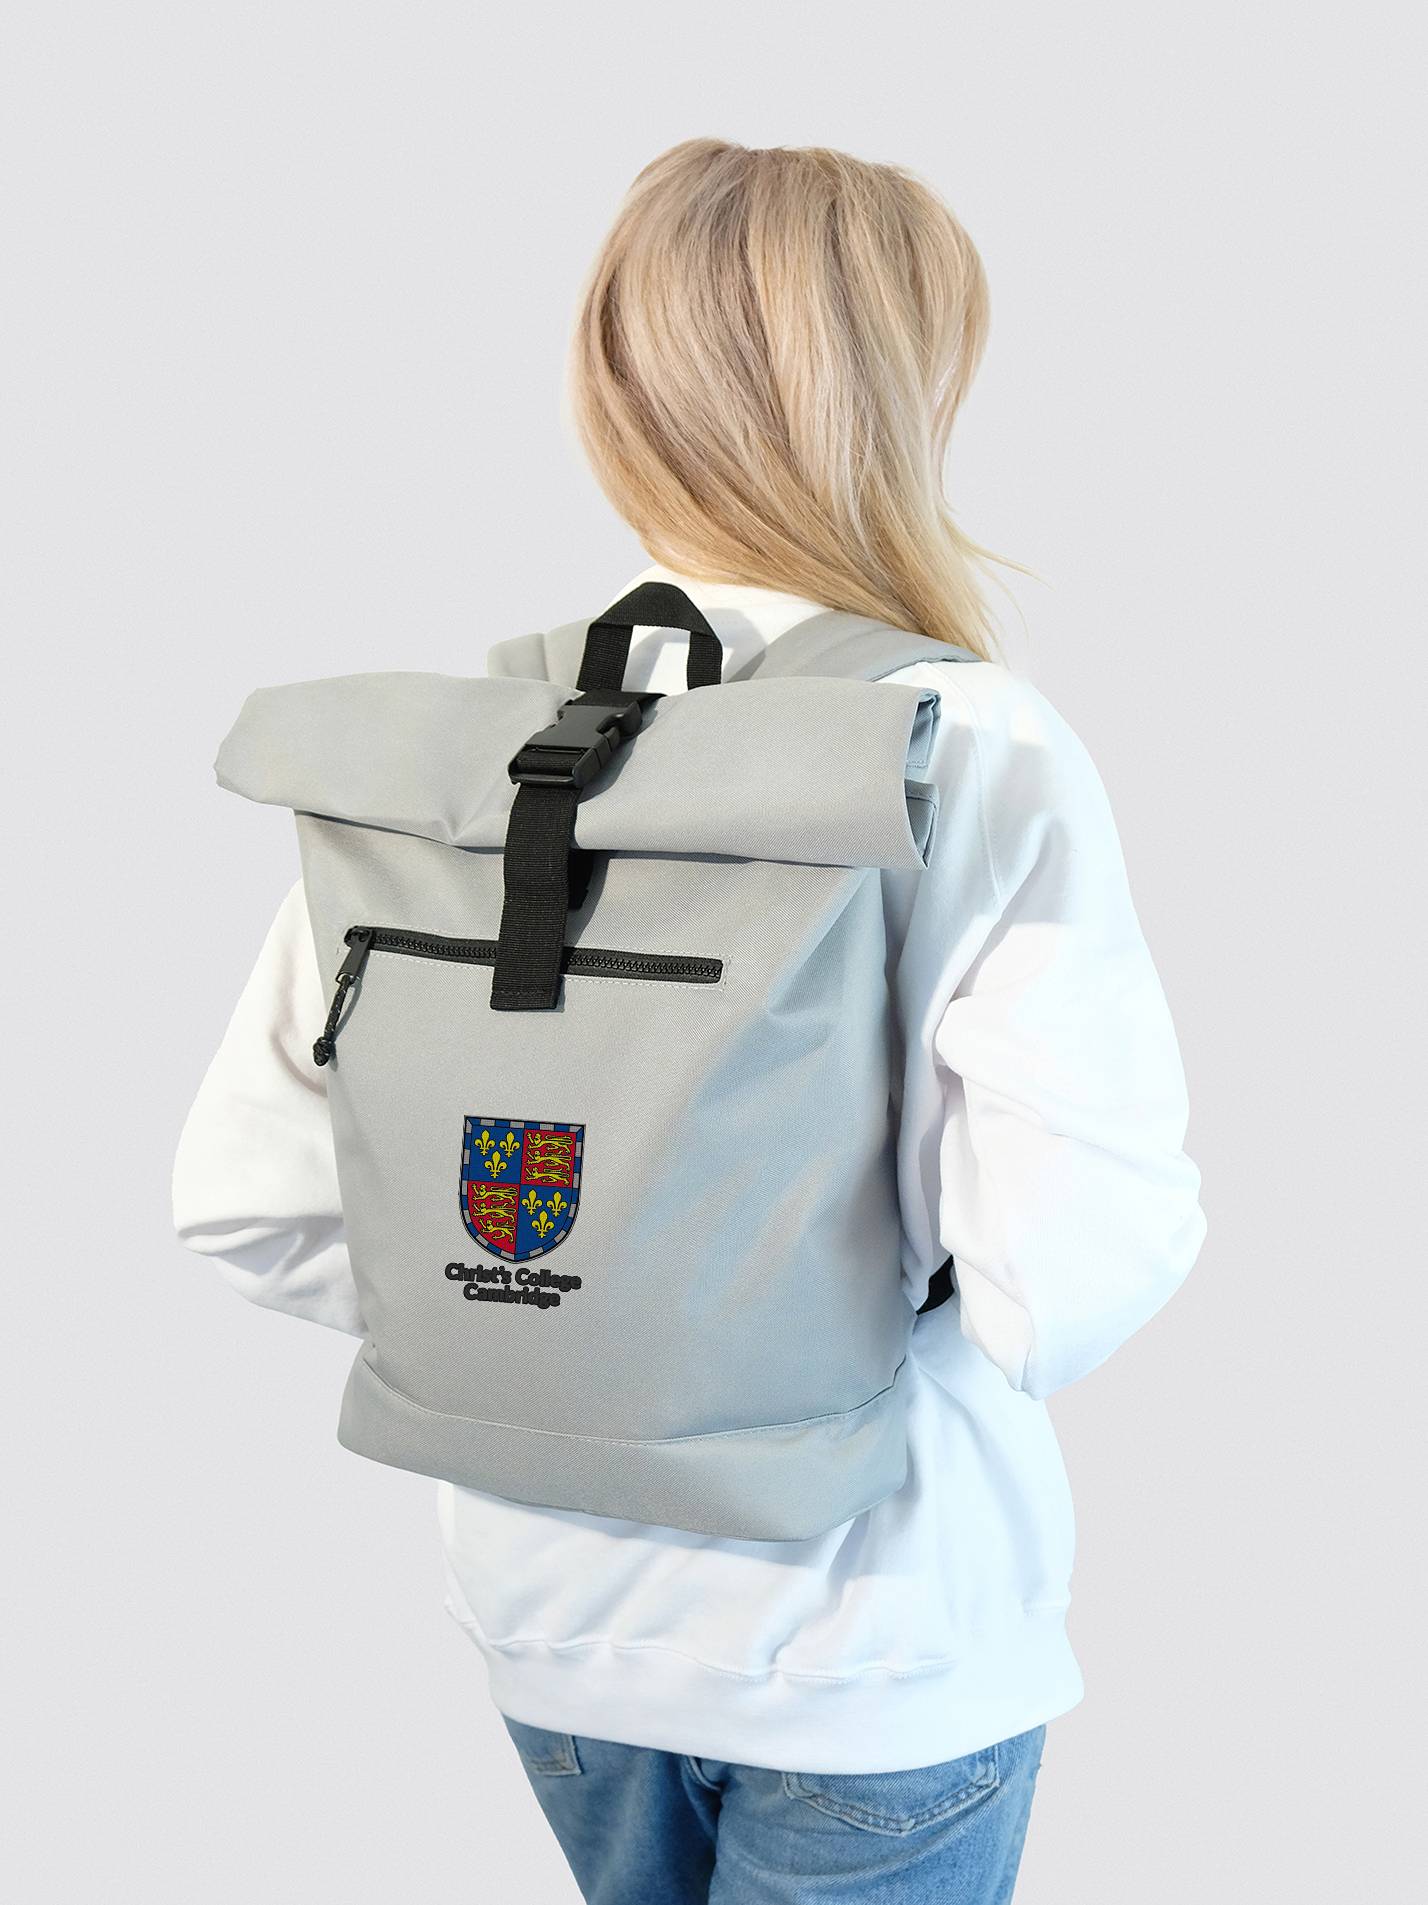 Christ's College Cambridge JCR Roll Top Backpack